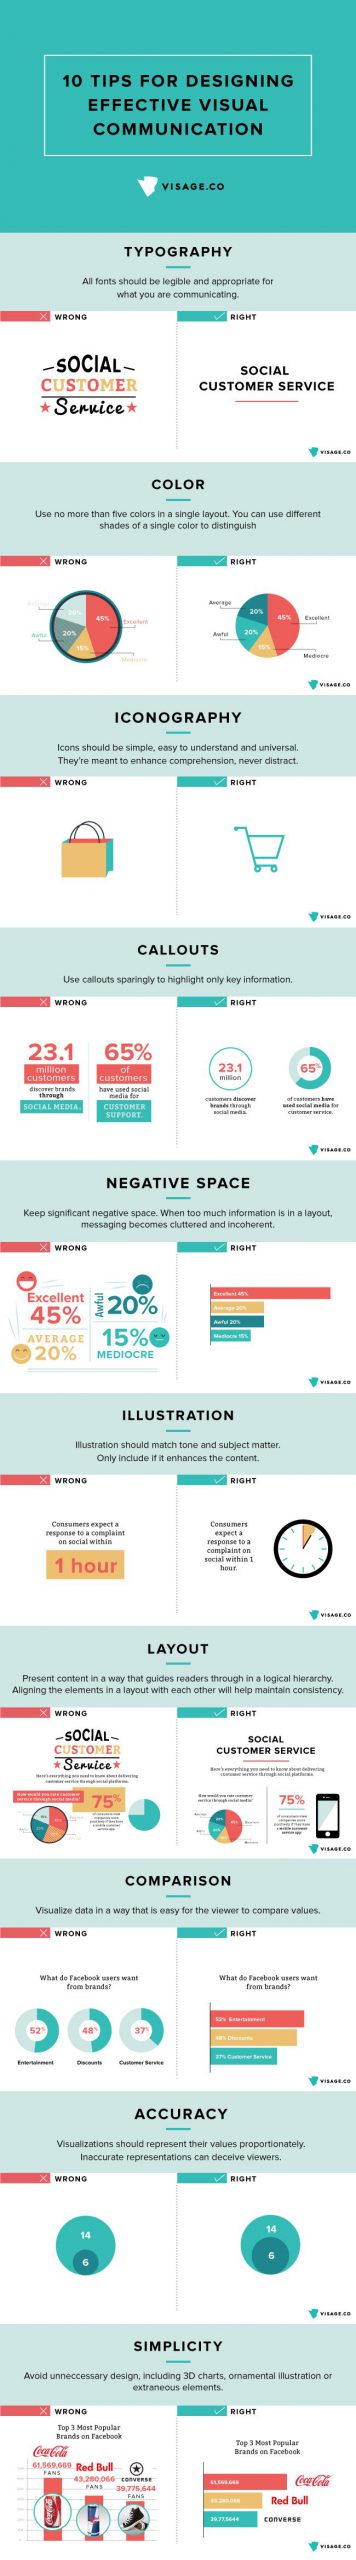 web design basics 10 tips for effective visual communication infographic scaled 1